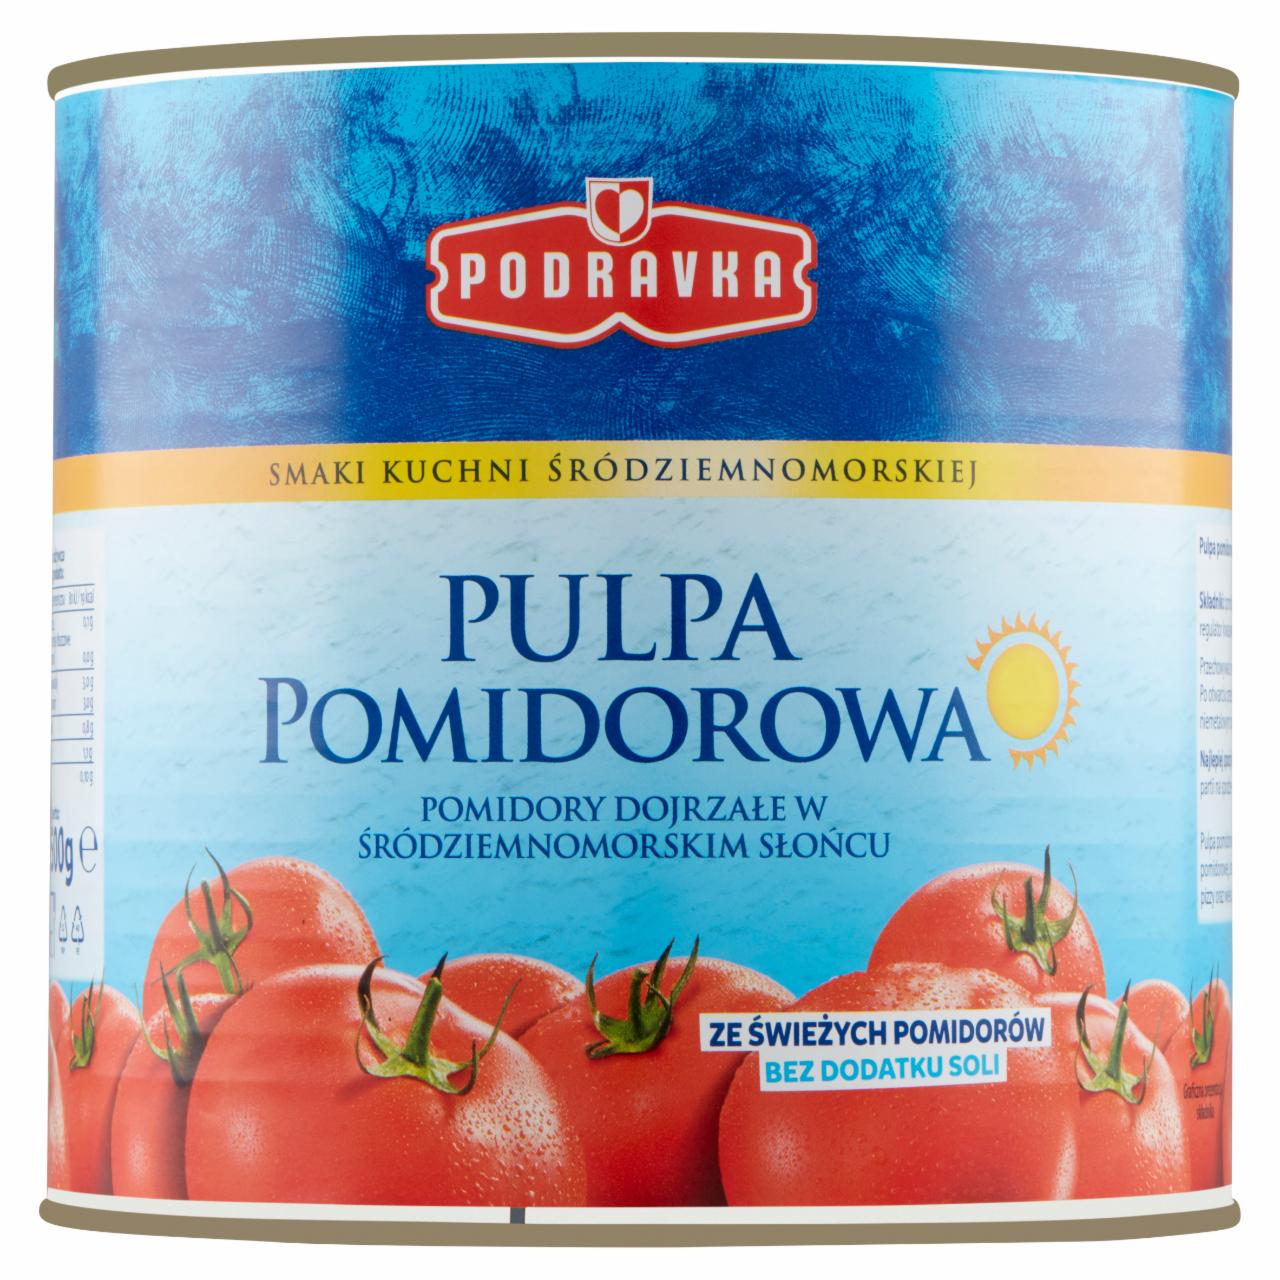 Zdjęcia - Podravka Pulpa pomidorowa 2500 g